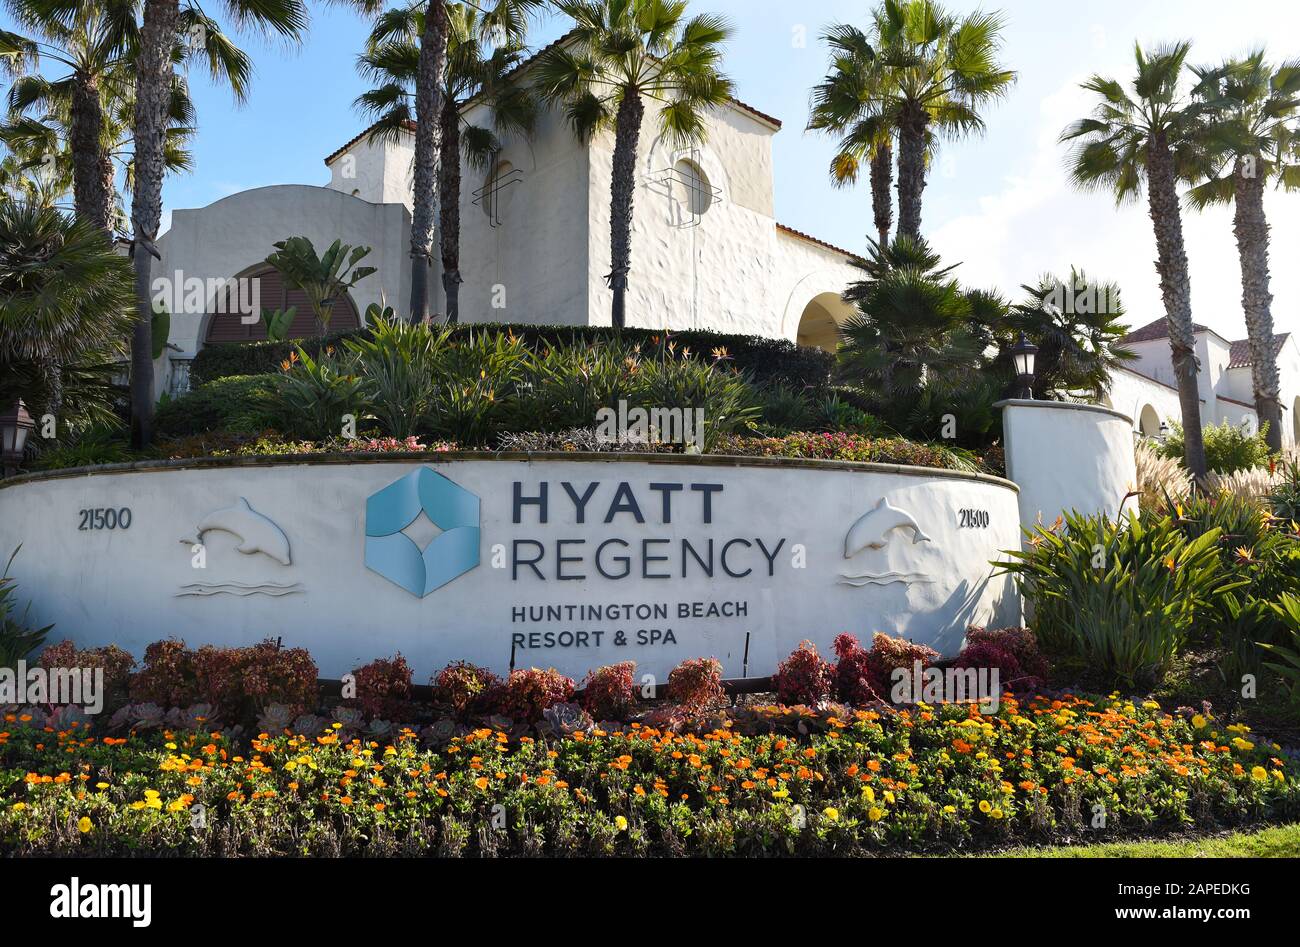 HUNTINGTON BEACH, KALIFORNIEN - 22. JANUAR 2020: Schild im Hyatt Regency Resort and Spa am Pacific Coast Highway. Stockfoto